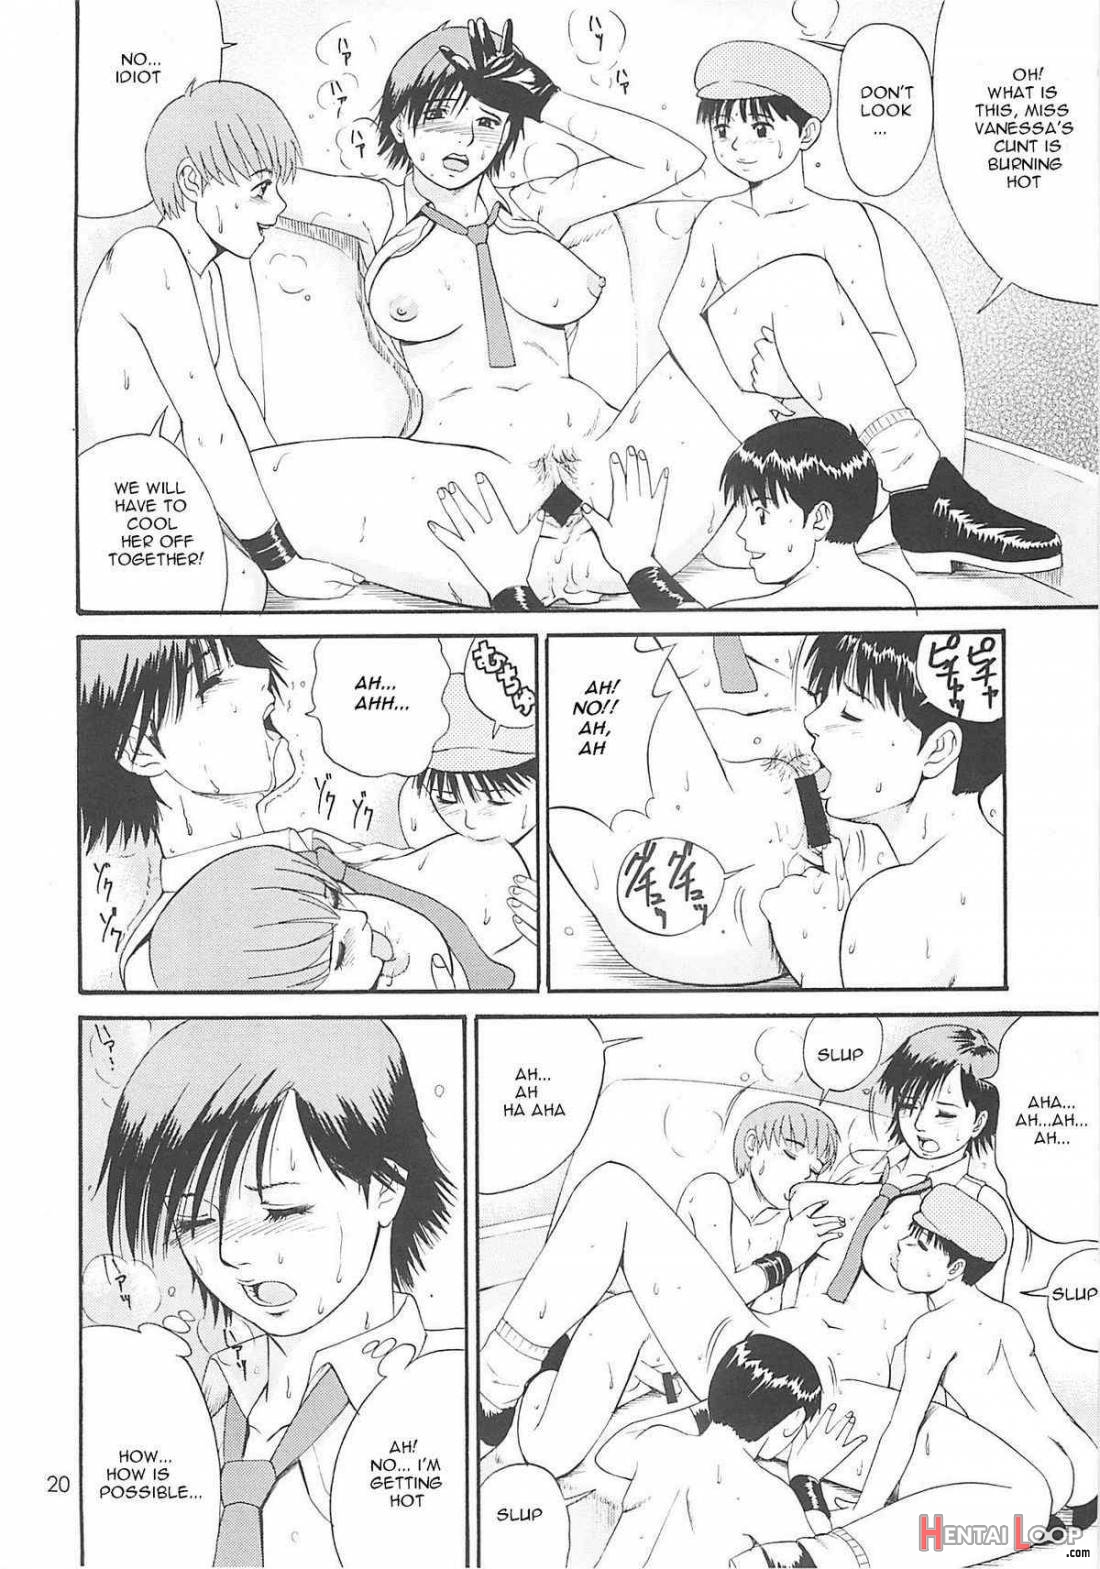 The Yuri&Friends 2000 page 20